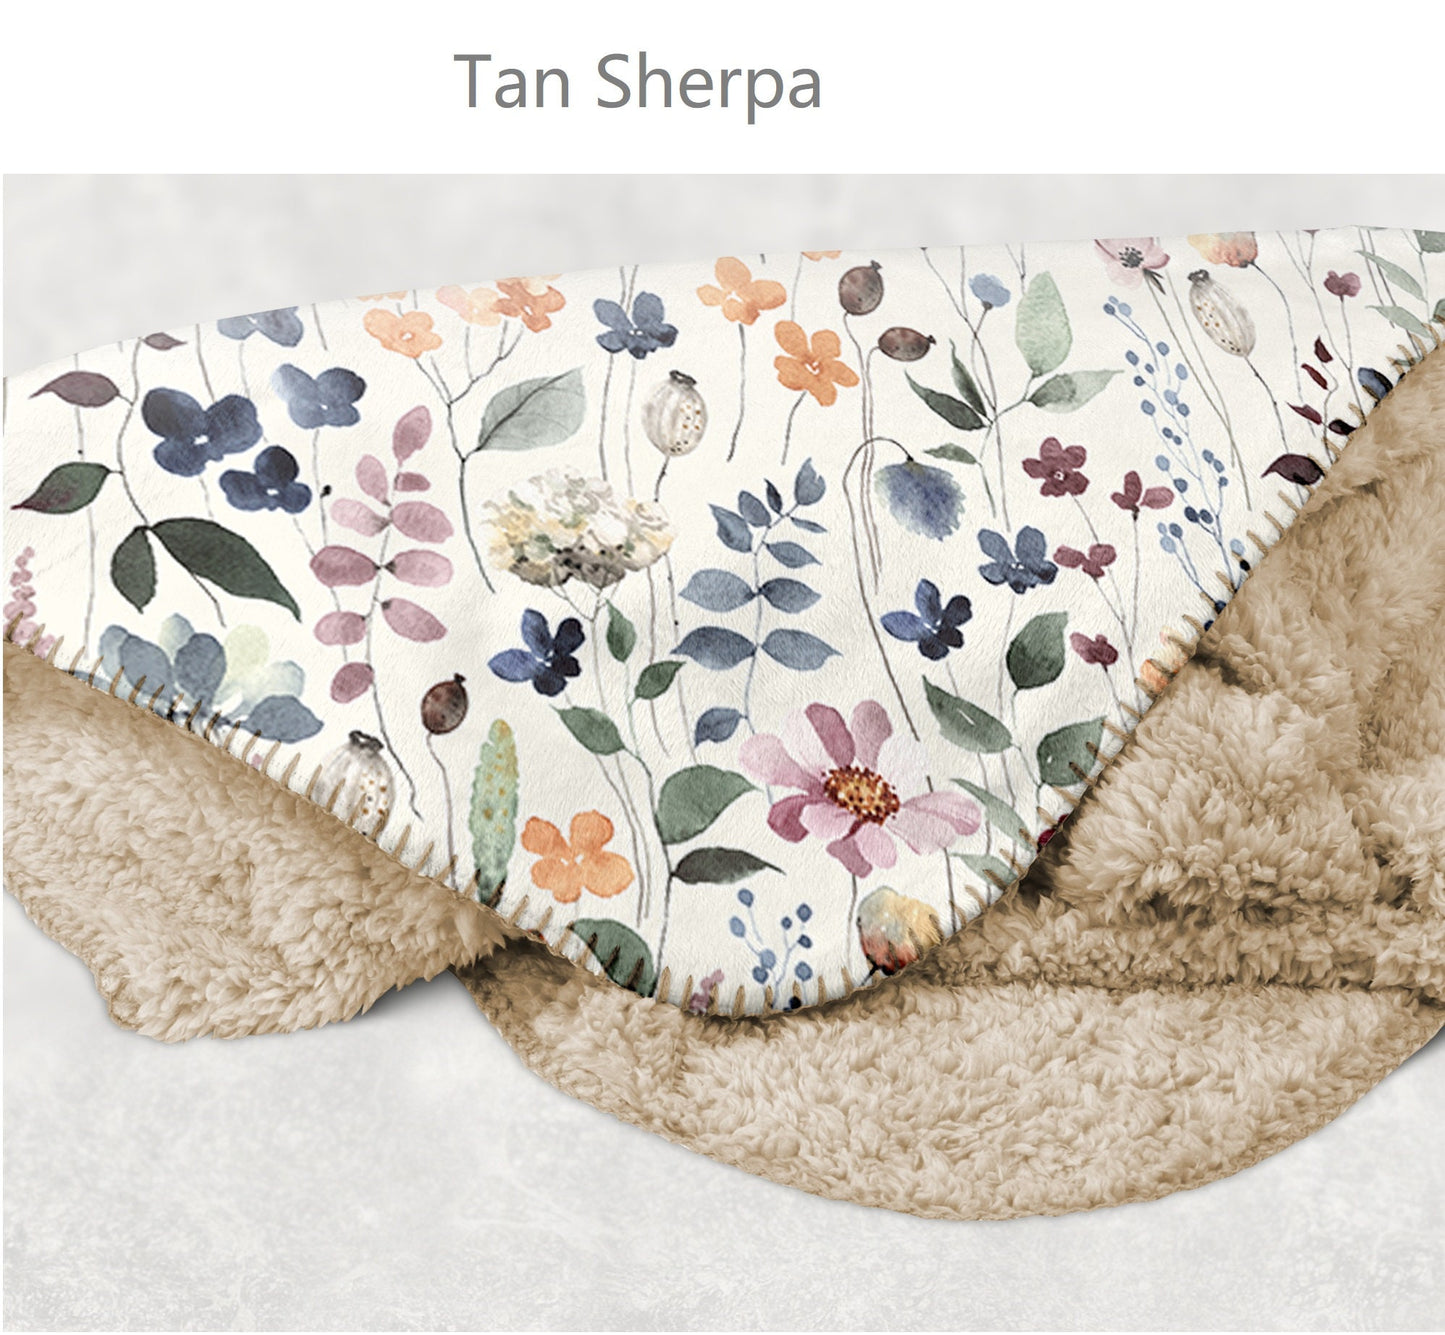 Retro Design personalize blanket, Minky or Sherpa custom blanket, Baby blanket, birthday gift idea